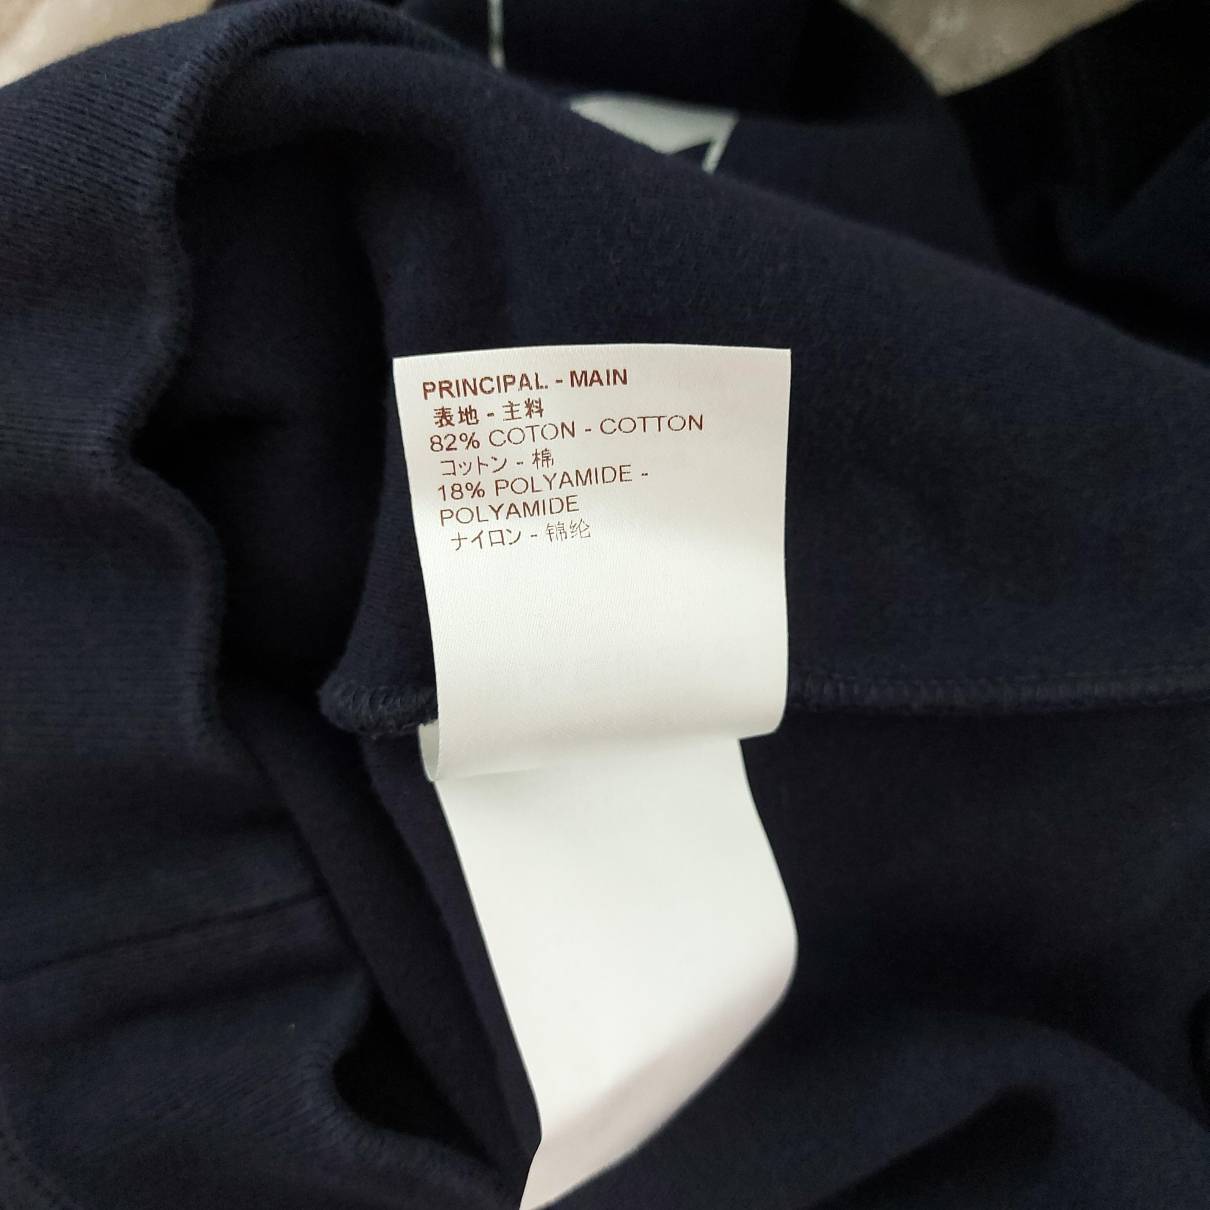 Louis Vuitton - Authenticated Sweatshirt - Cotton Navy for Men, Good Condition